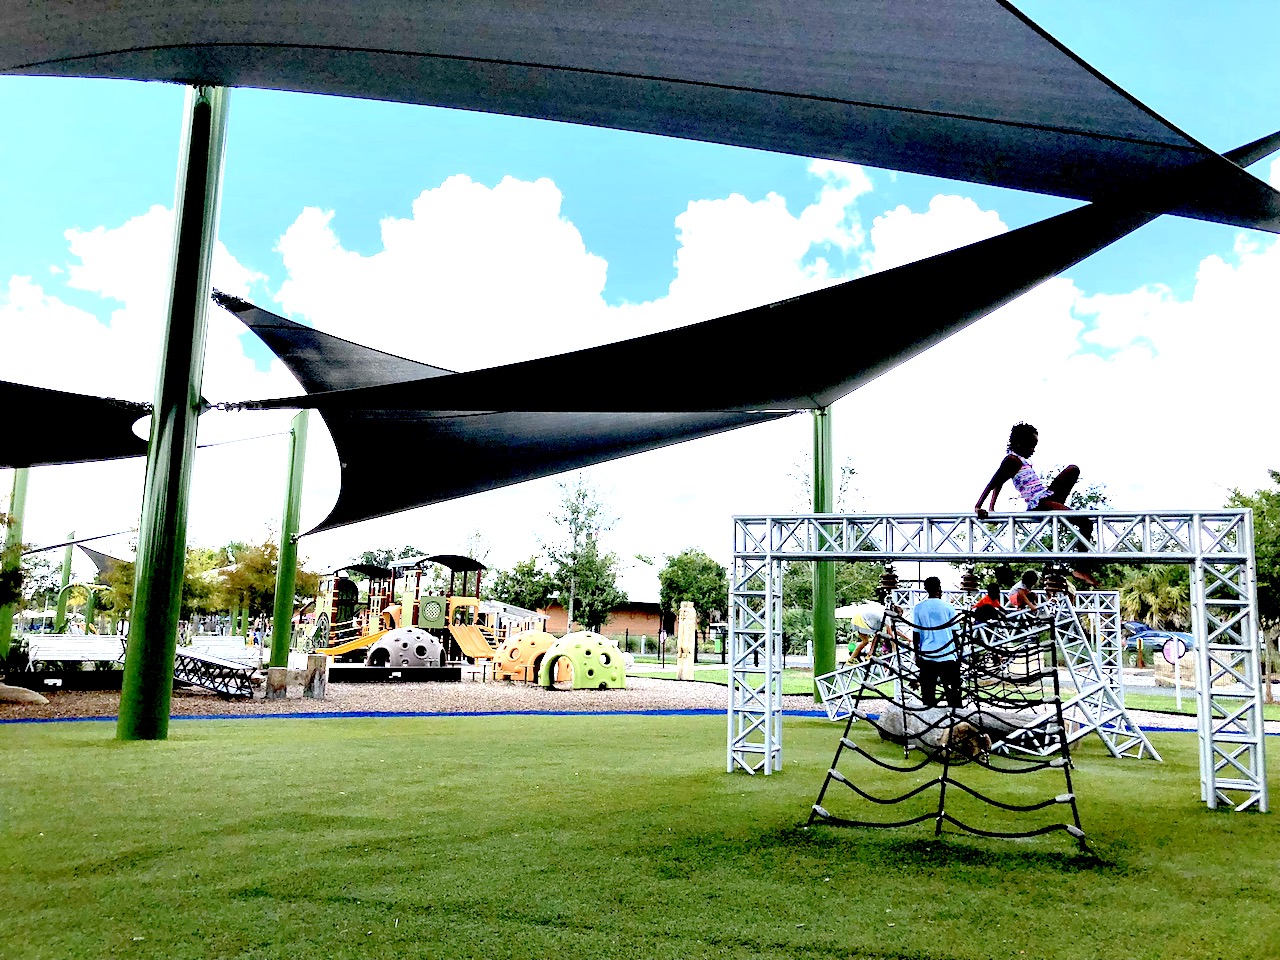 Depot Park Shaded Playground - 2-day itinerary for families in Gainesville, FL #gainesville #florida #tourofflorida #alachuacounty #gainesvilleFL #universityofflorida #UF #gogators #Gainesvillewithkids #gainesvilleitinerary 